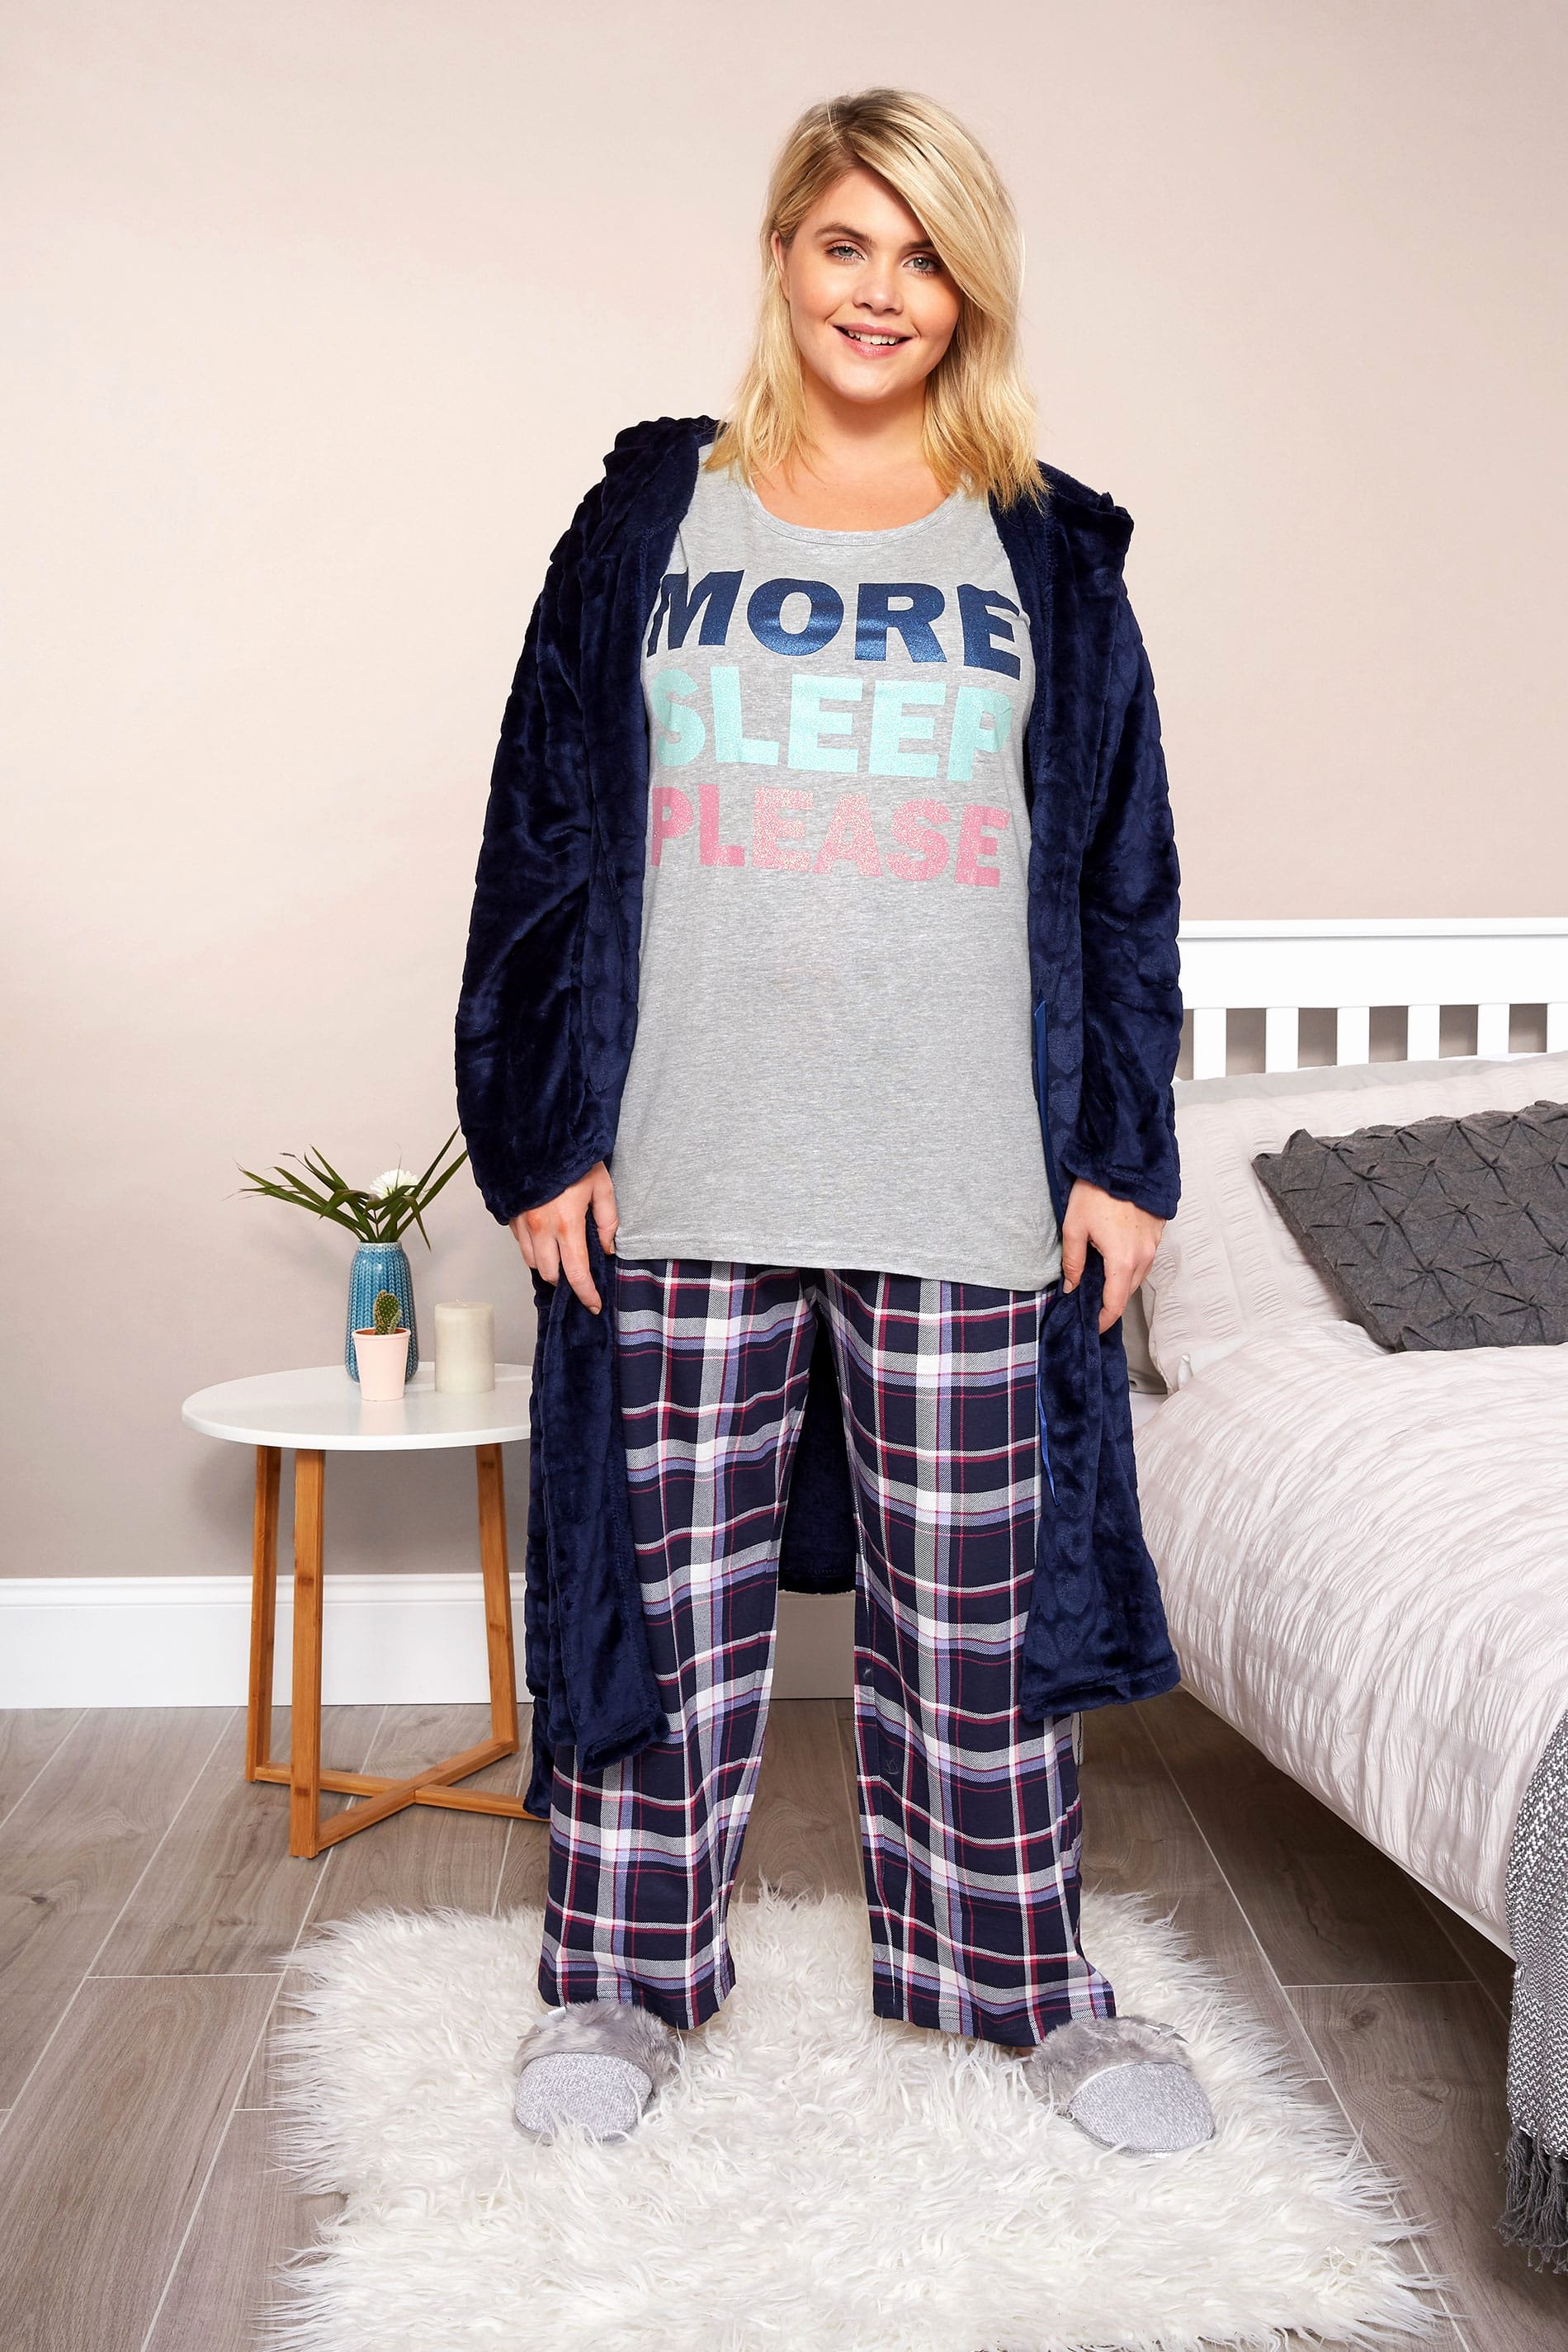 Store Hours Sign Template Unique Plus Size Grey More Sleep Please Pyjama top